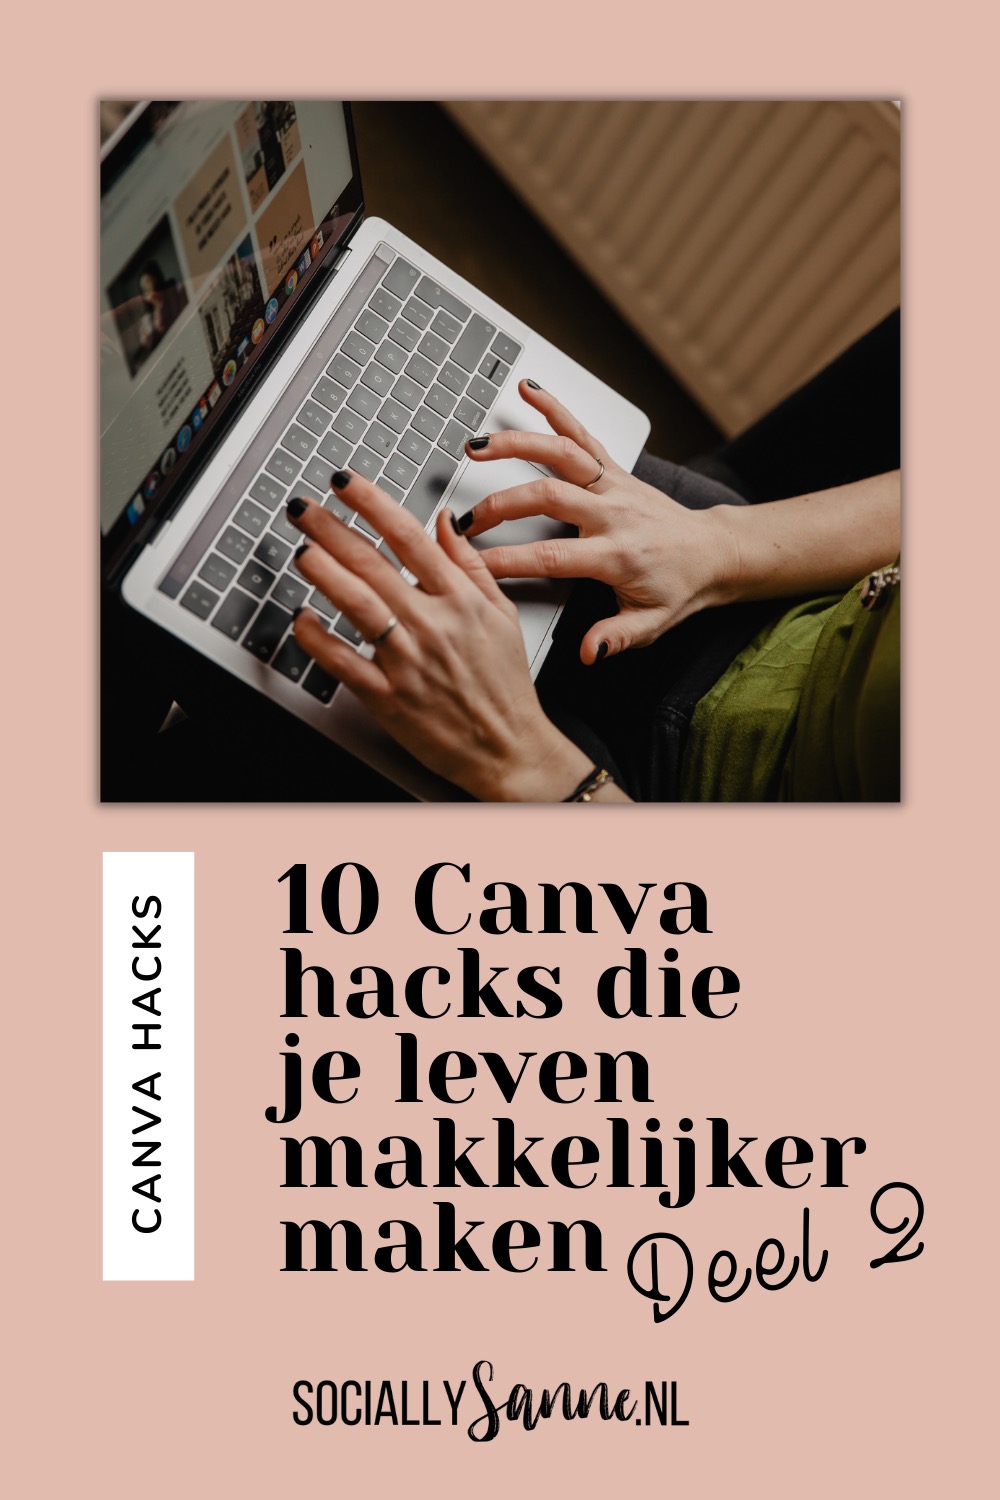 10 Canva Hacks die je leven makkelijker maken - Deel 2 - Socially Sanne